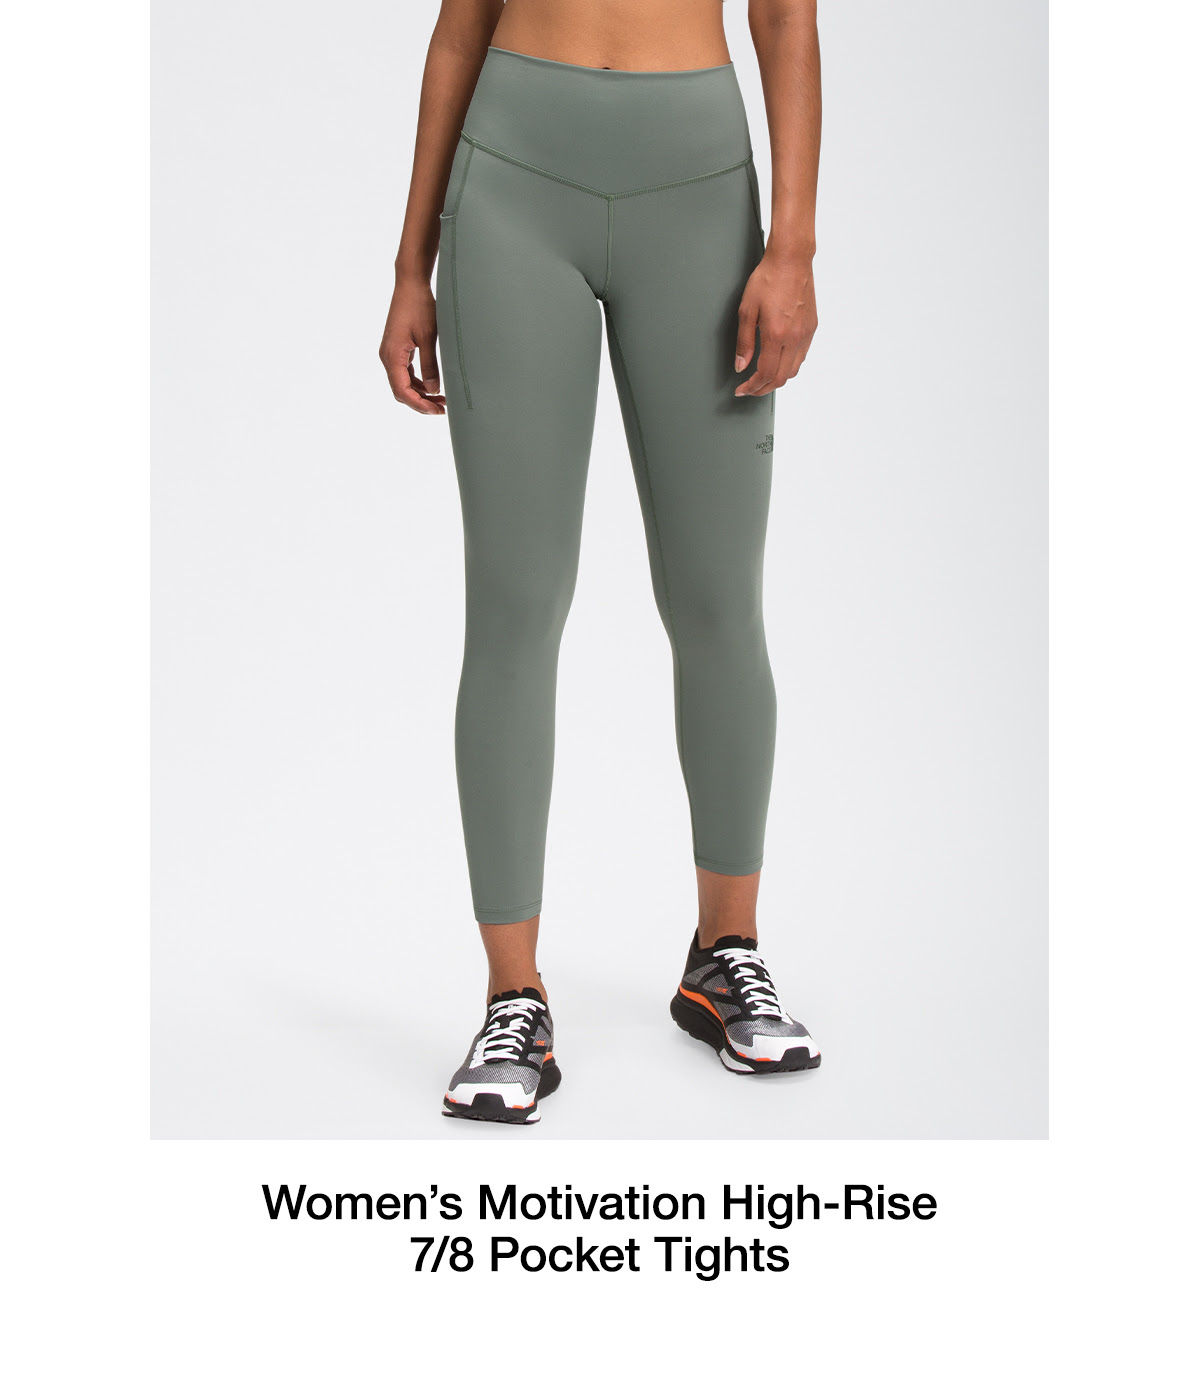 Women's Motivation High-Rise 7/8 Pocket Tights